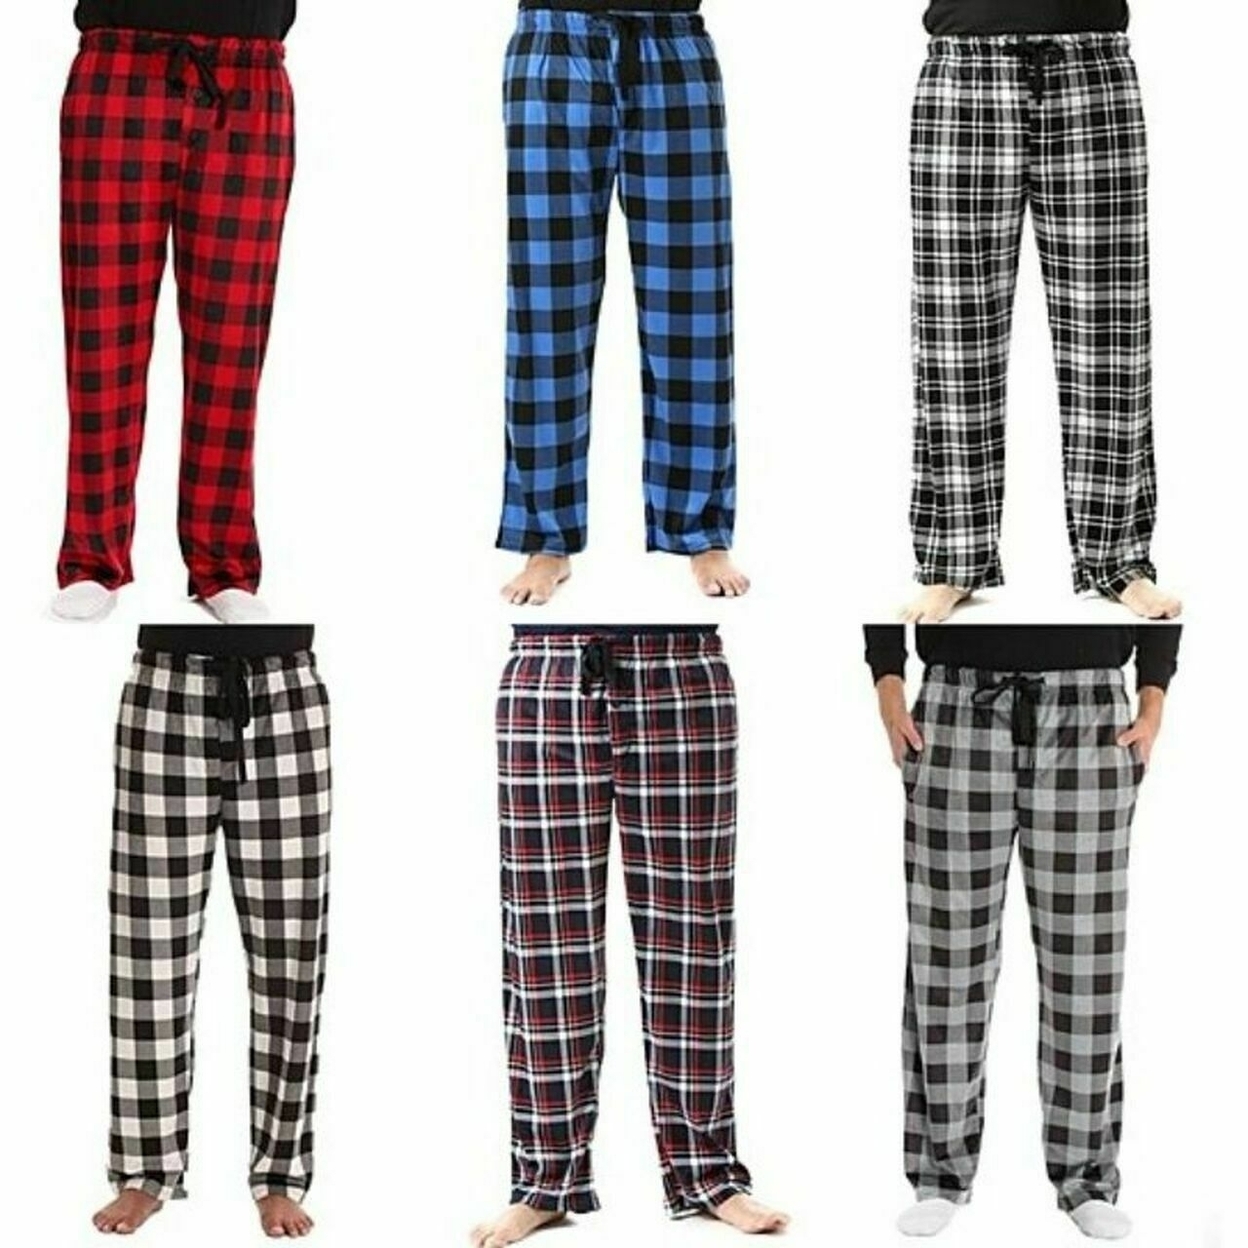 2-Pack: Men's Ultra Soft Cozy Flannel Fleece Plaid Pajama Sleep Bottom Lounge Pants - Black & Black, X-large